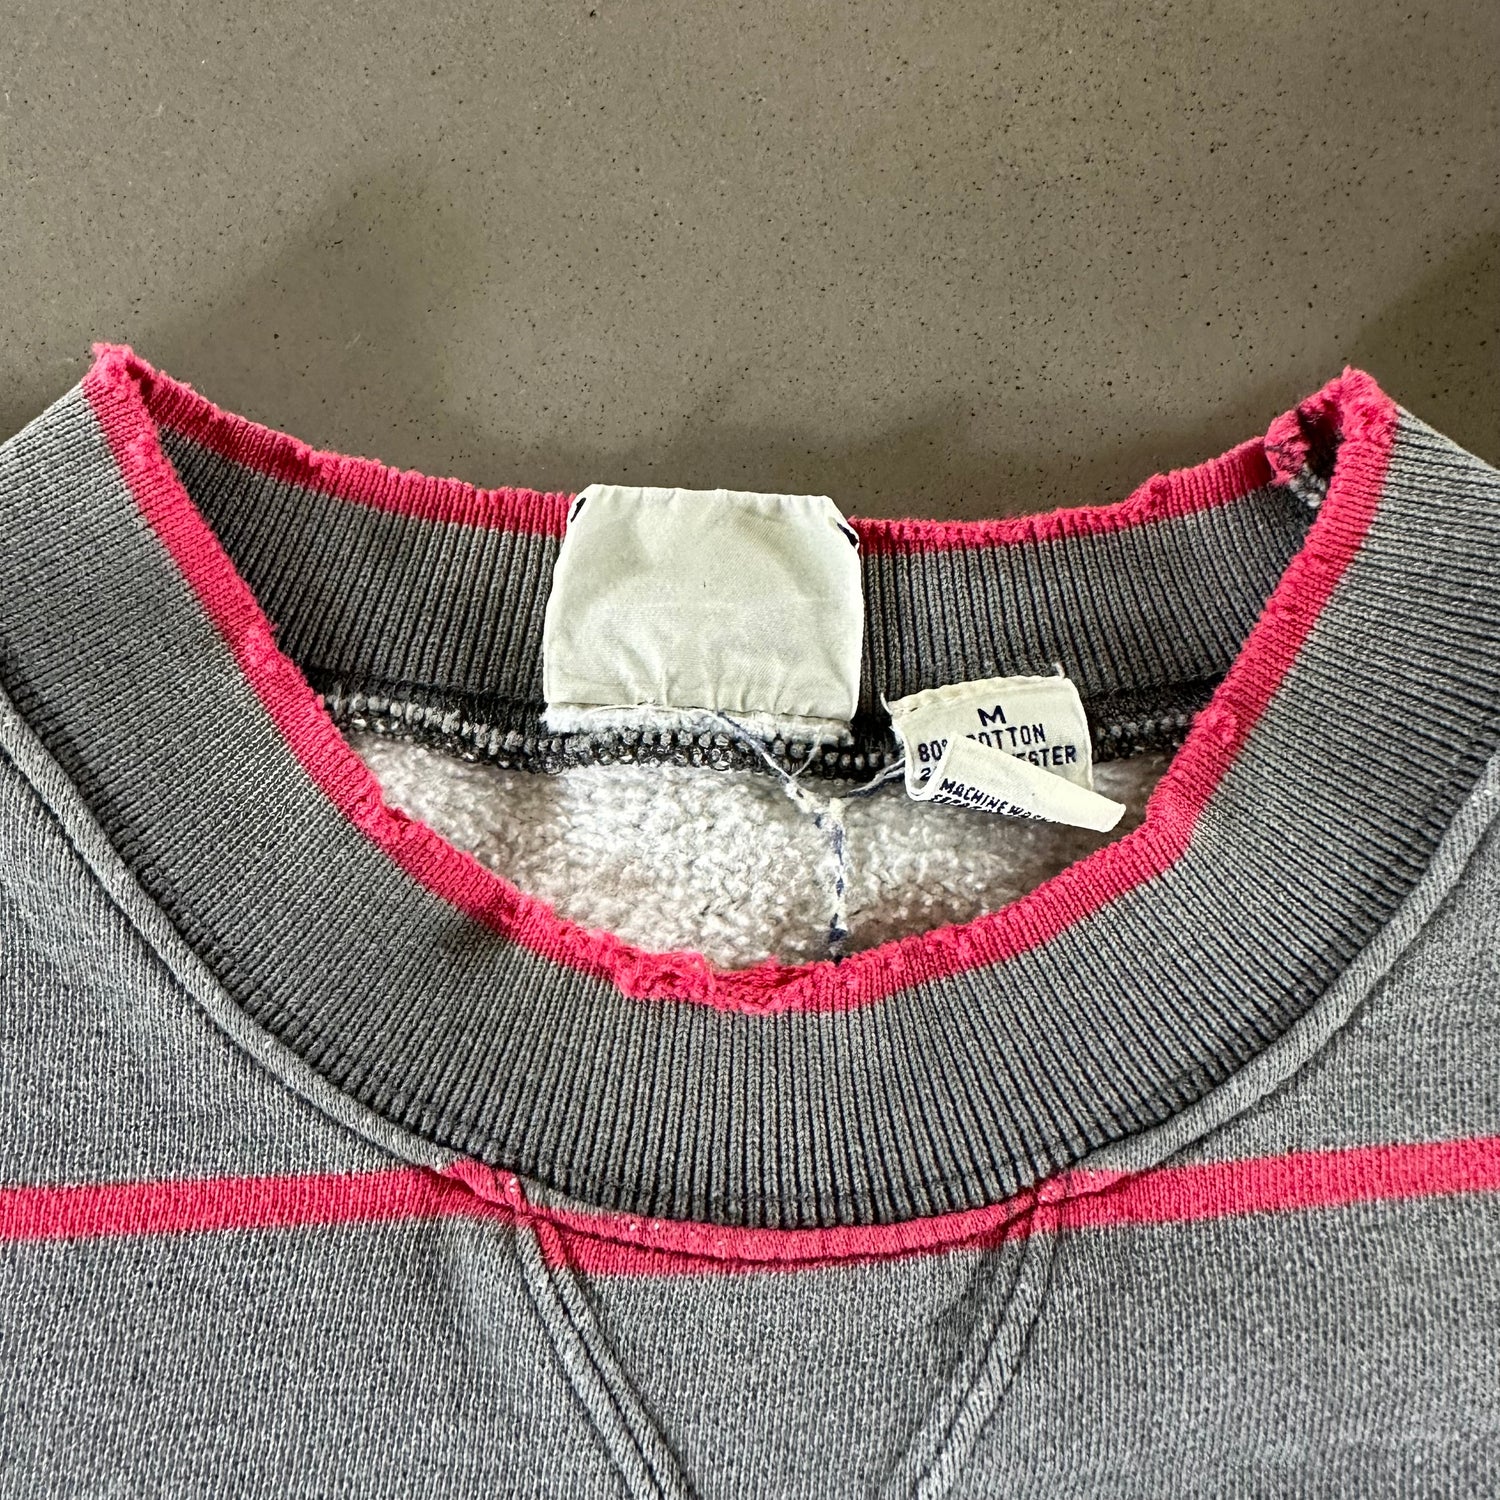 Vintage 1990s Stripeo Sweatshirt size Medium